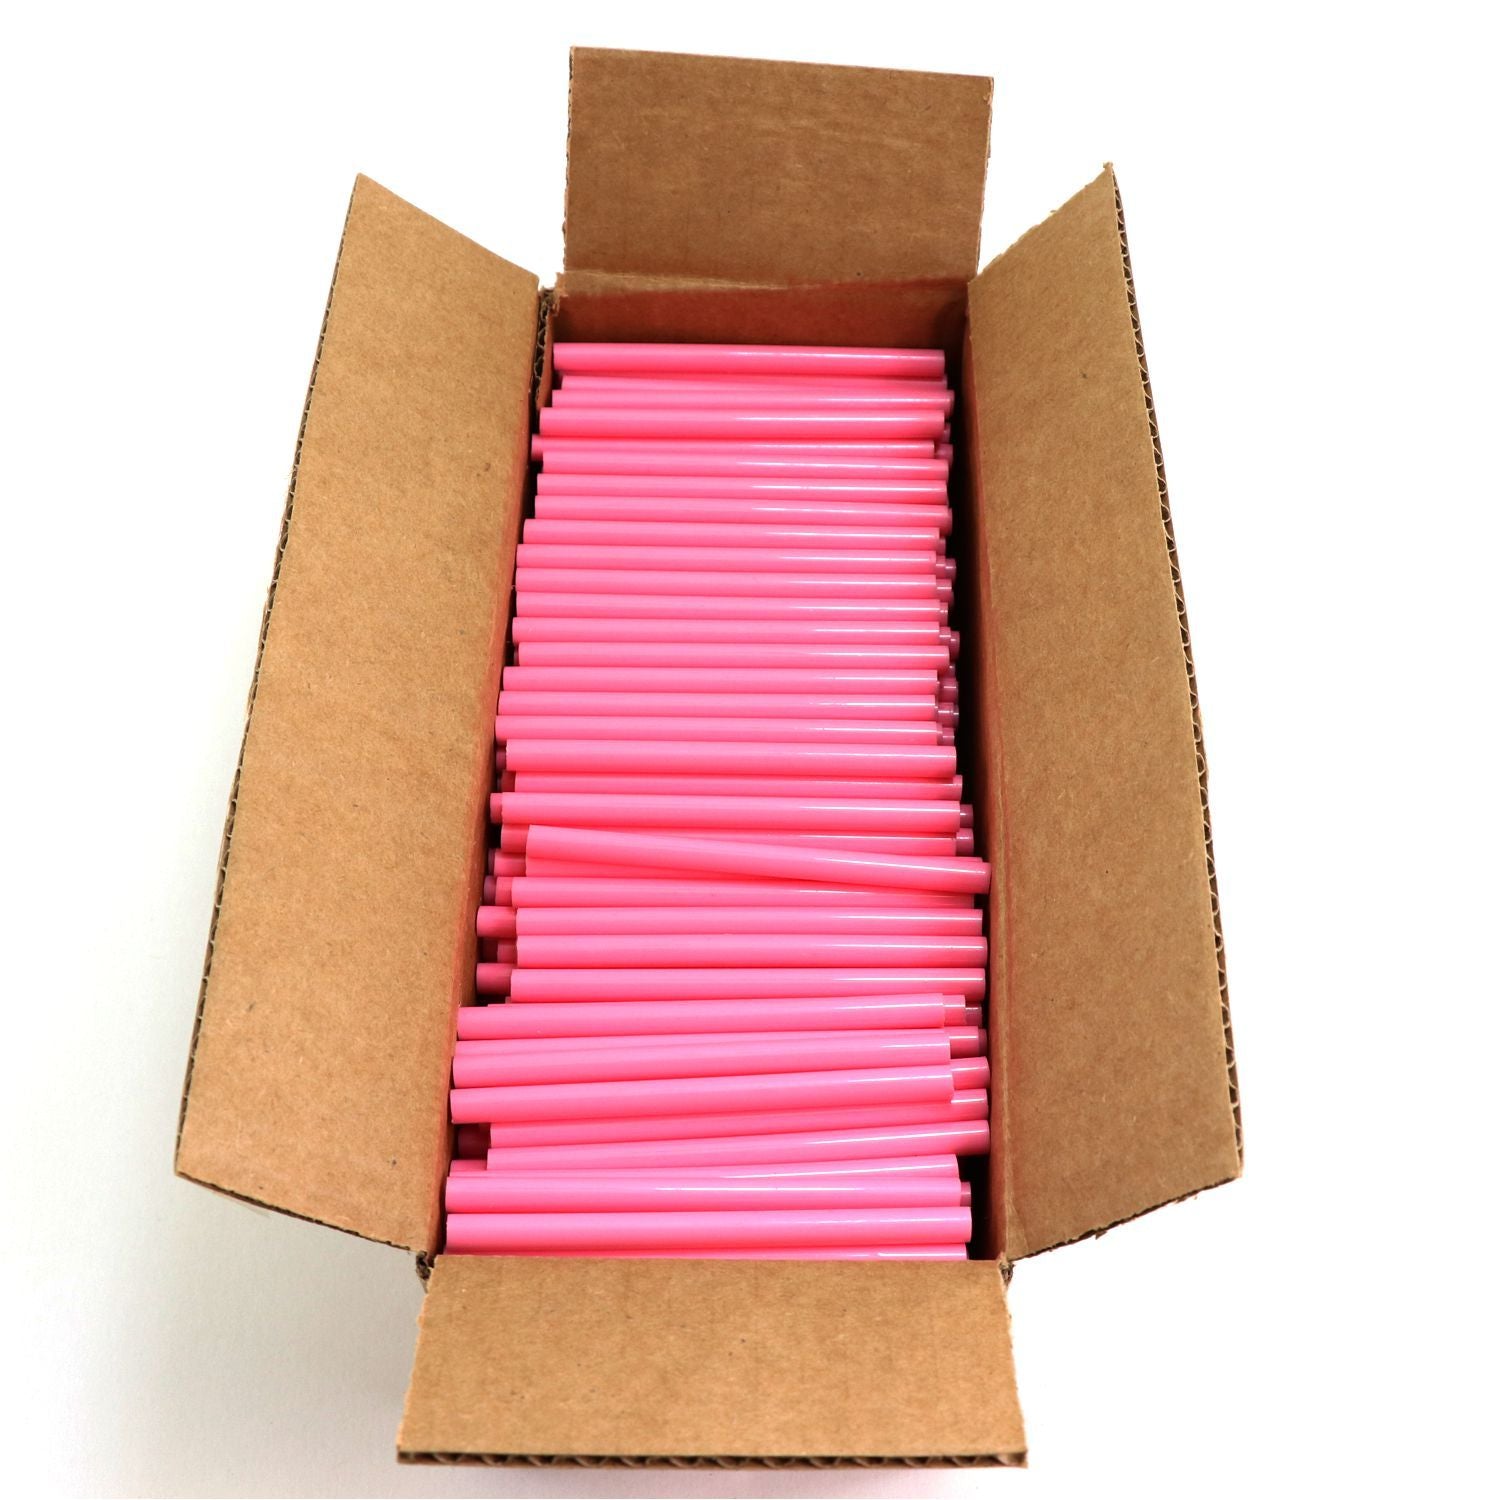 725M54CPINK Mini Size 4 Pink Color Hot Glue Stick - 5 lb Box